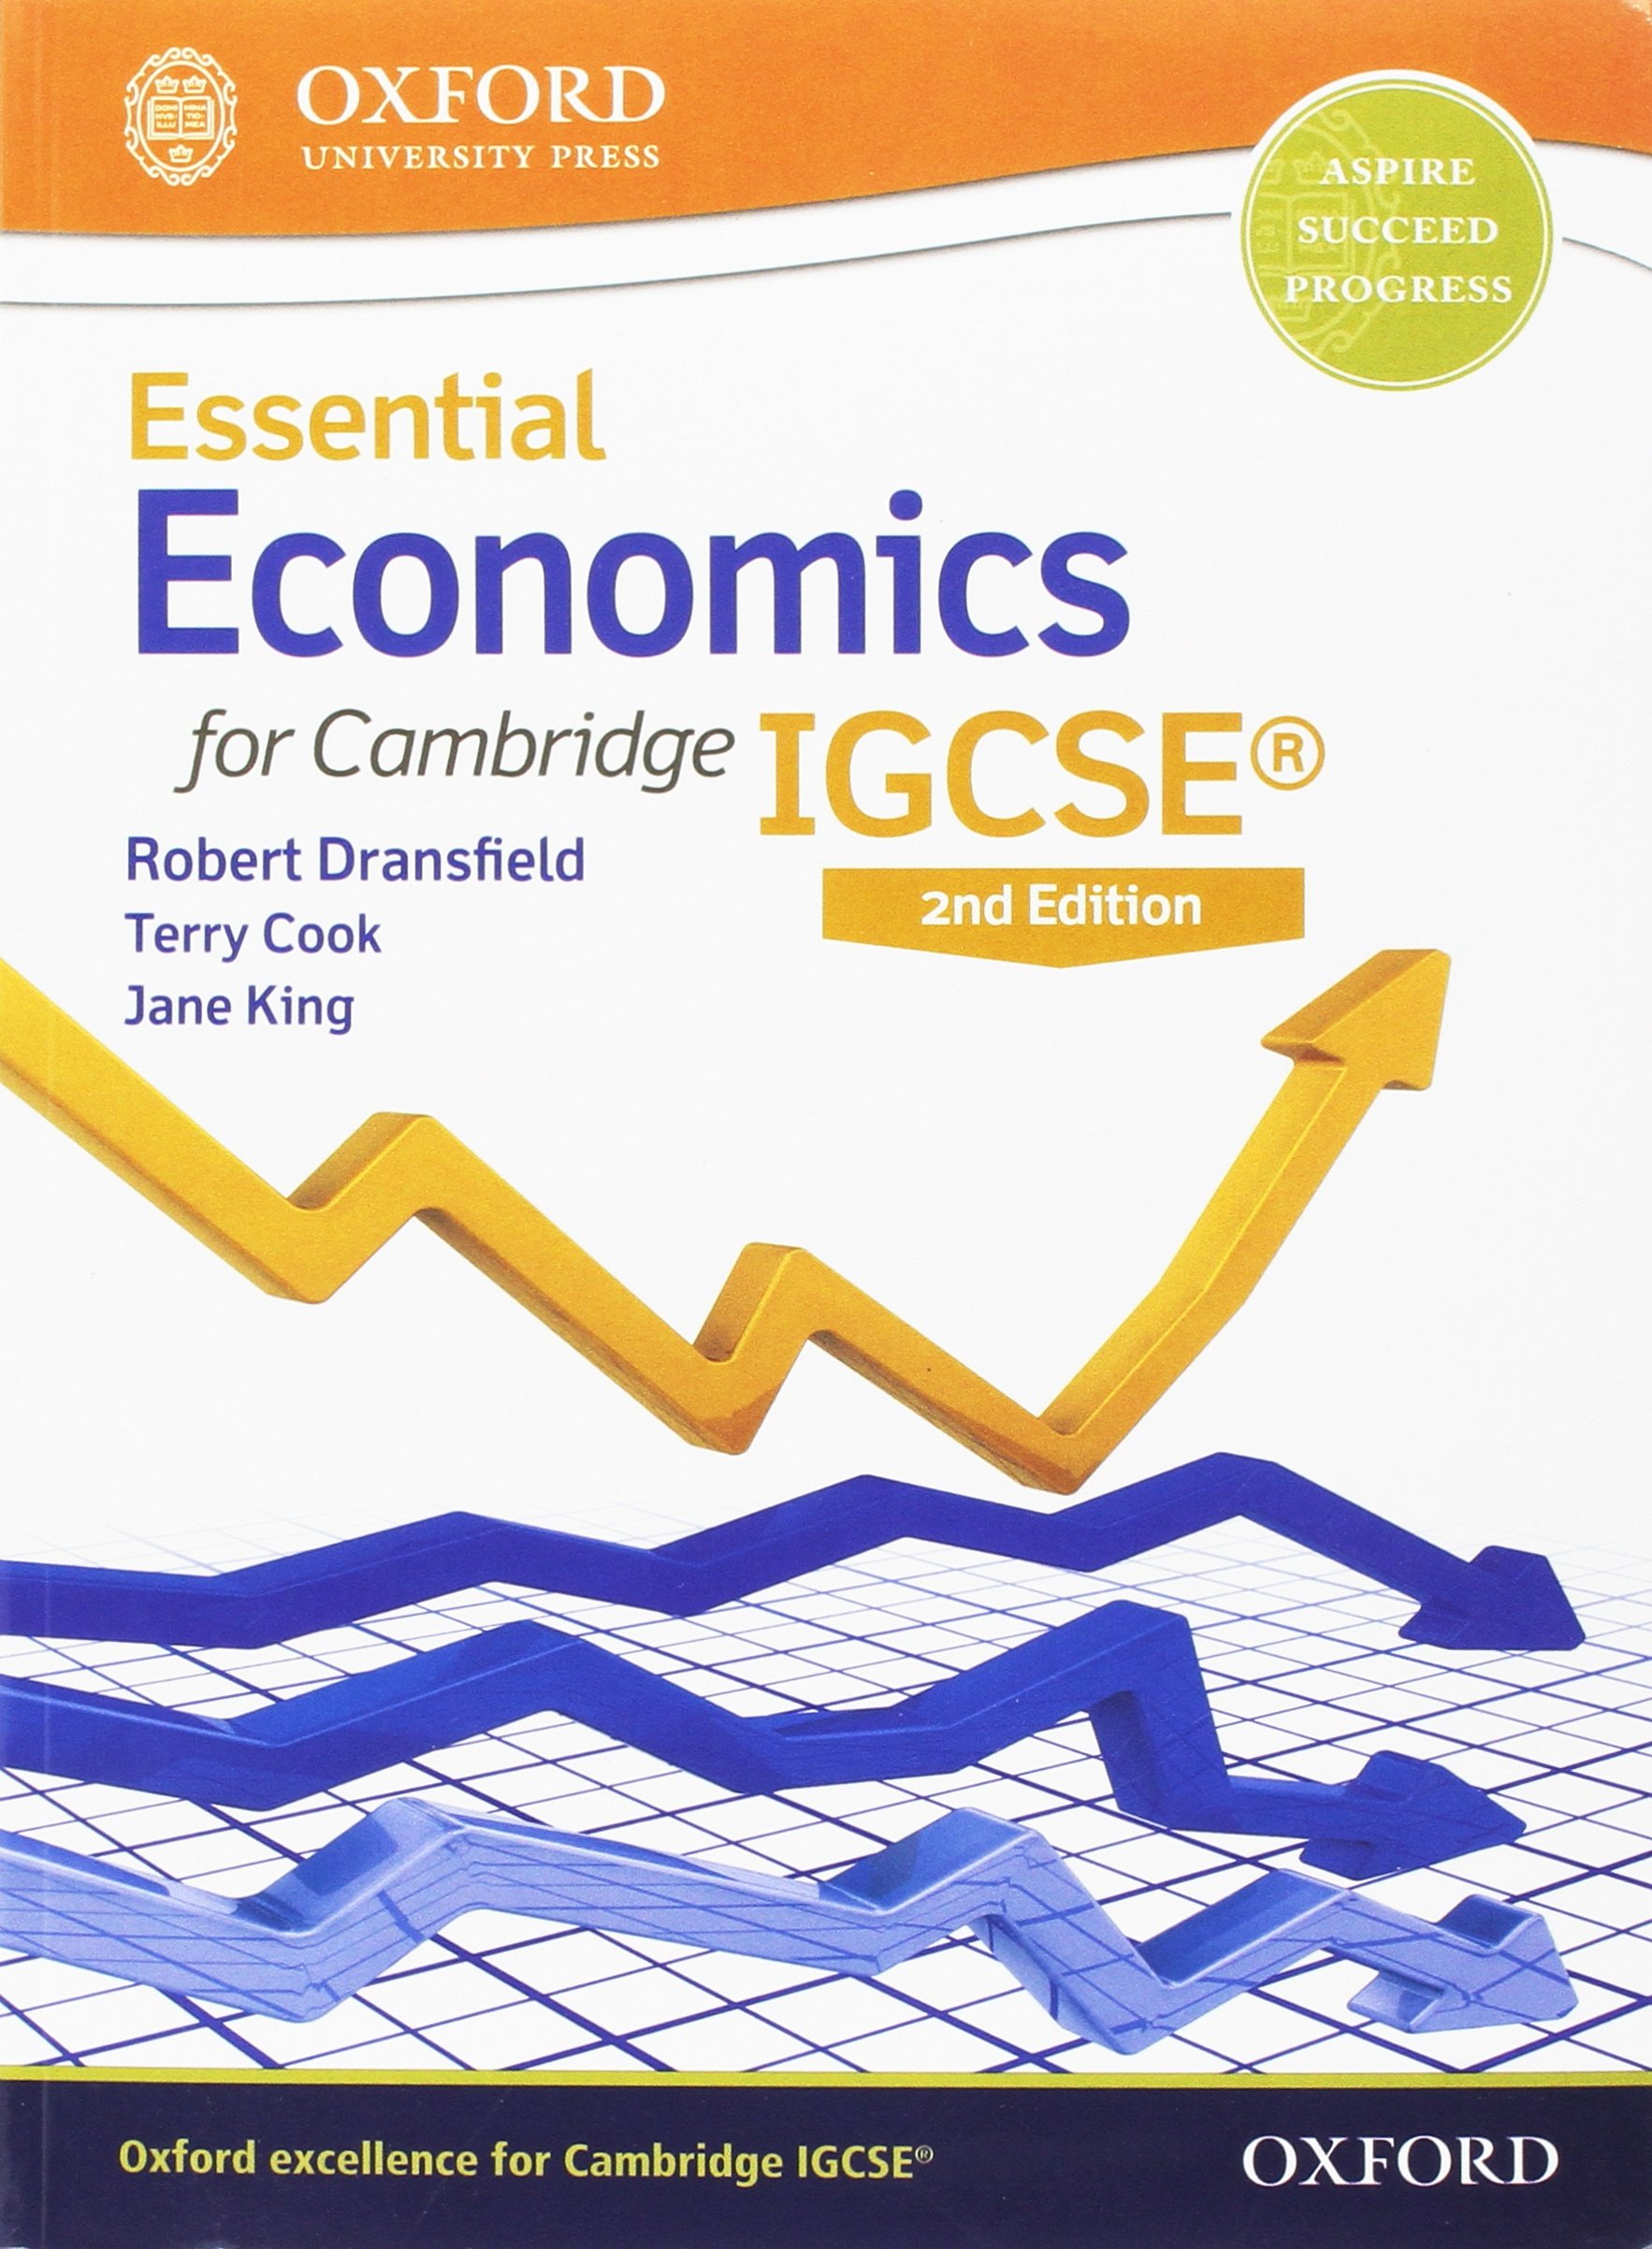 economics bgcse coursework